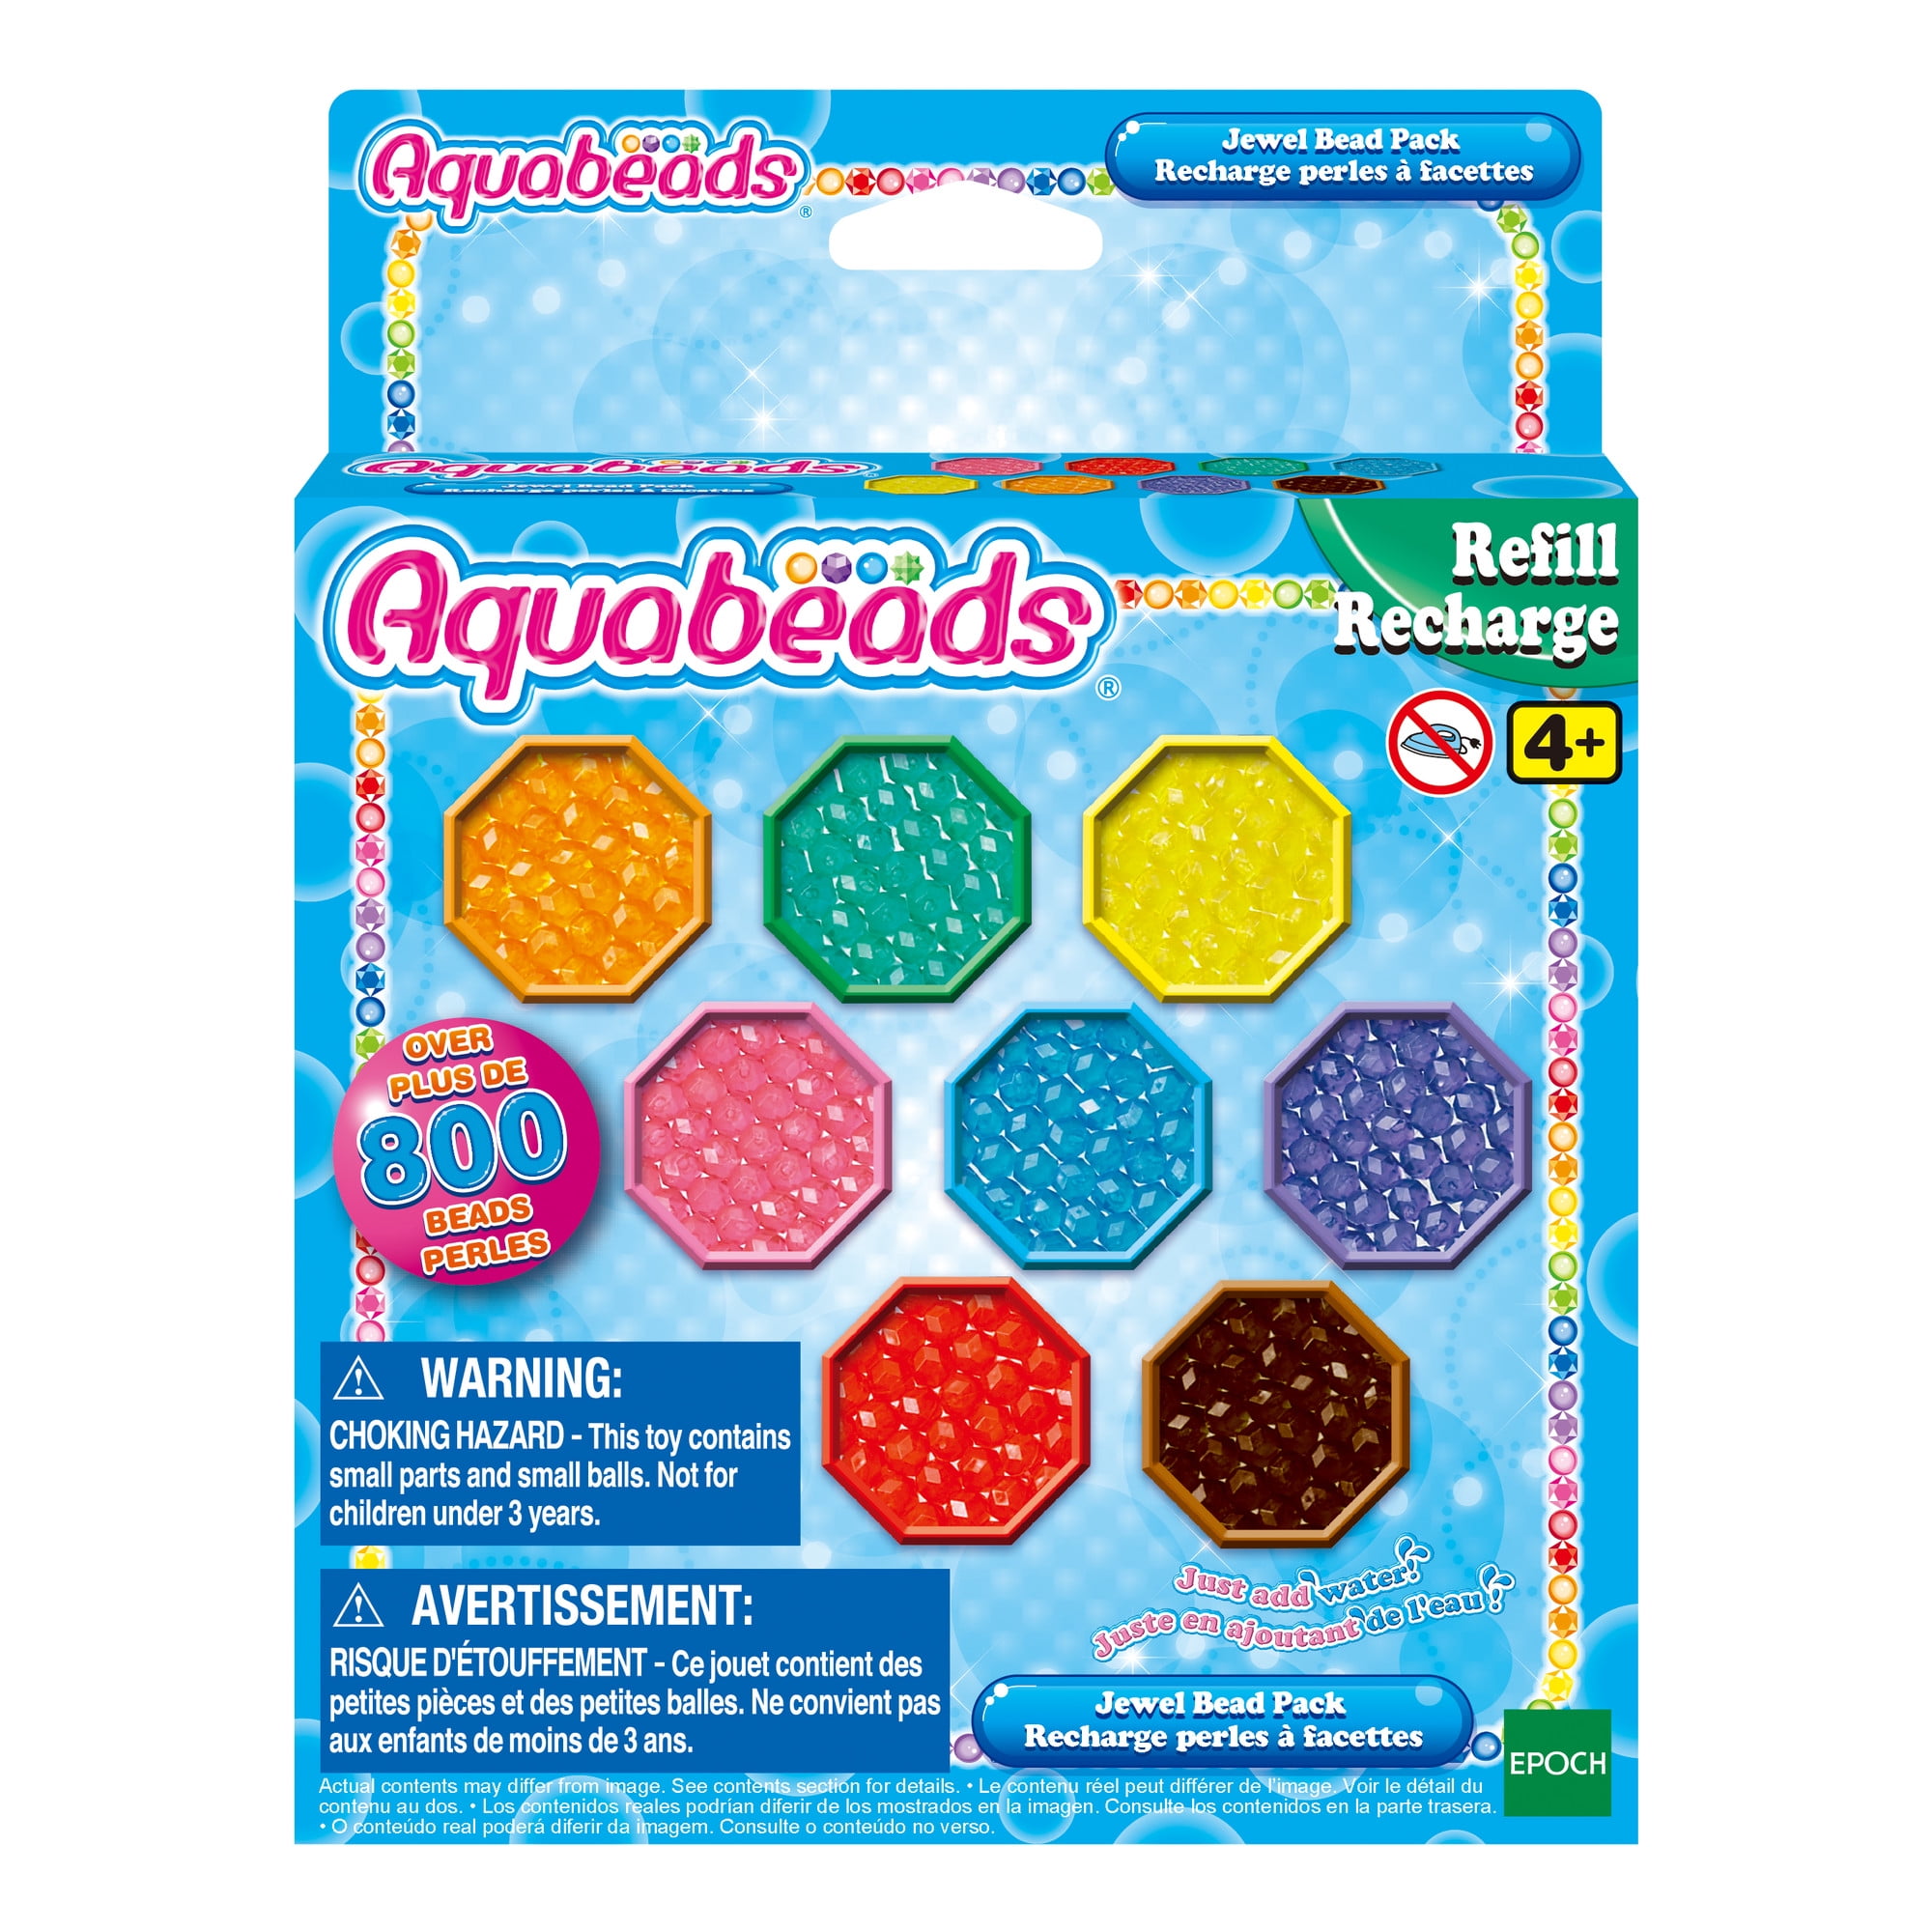 Jual Aquabeads / Aquabead / Isi Ulang Aqua Beads Refill Pack / Beados /Bead  Best Seller